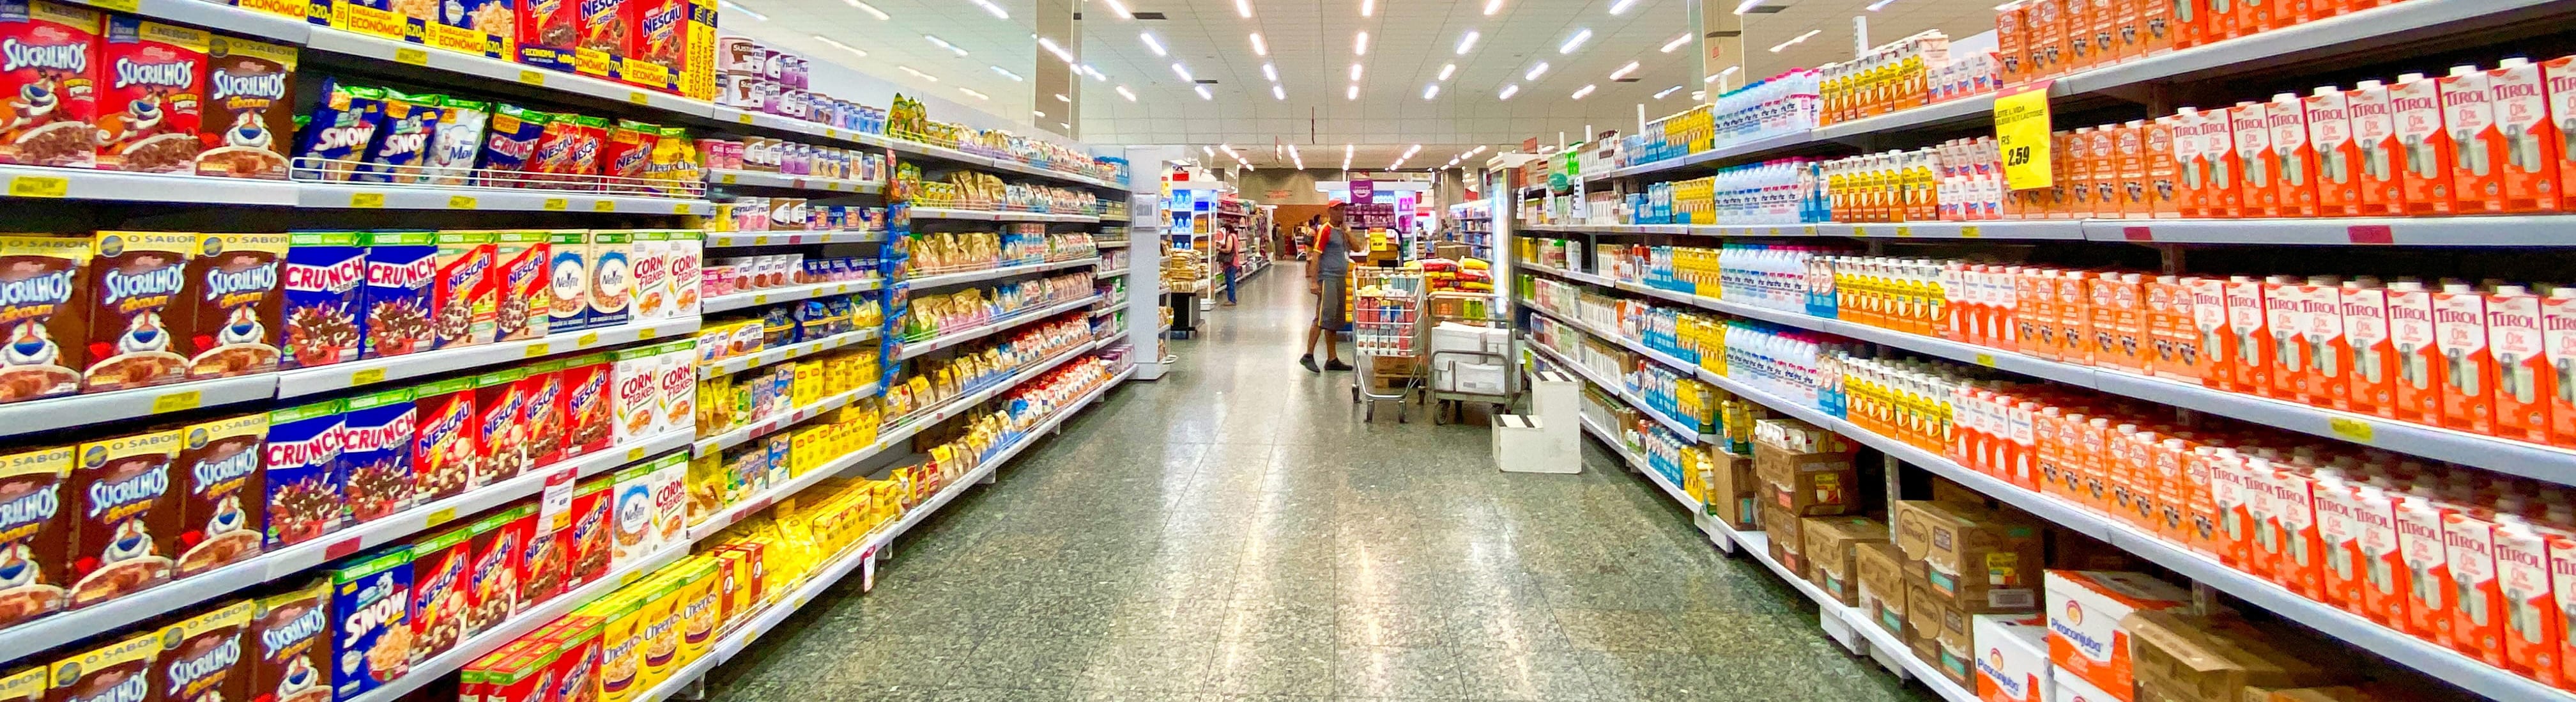 Smart lighting control in grocery retail market